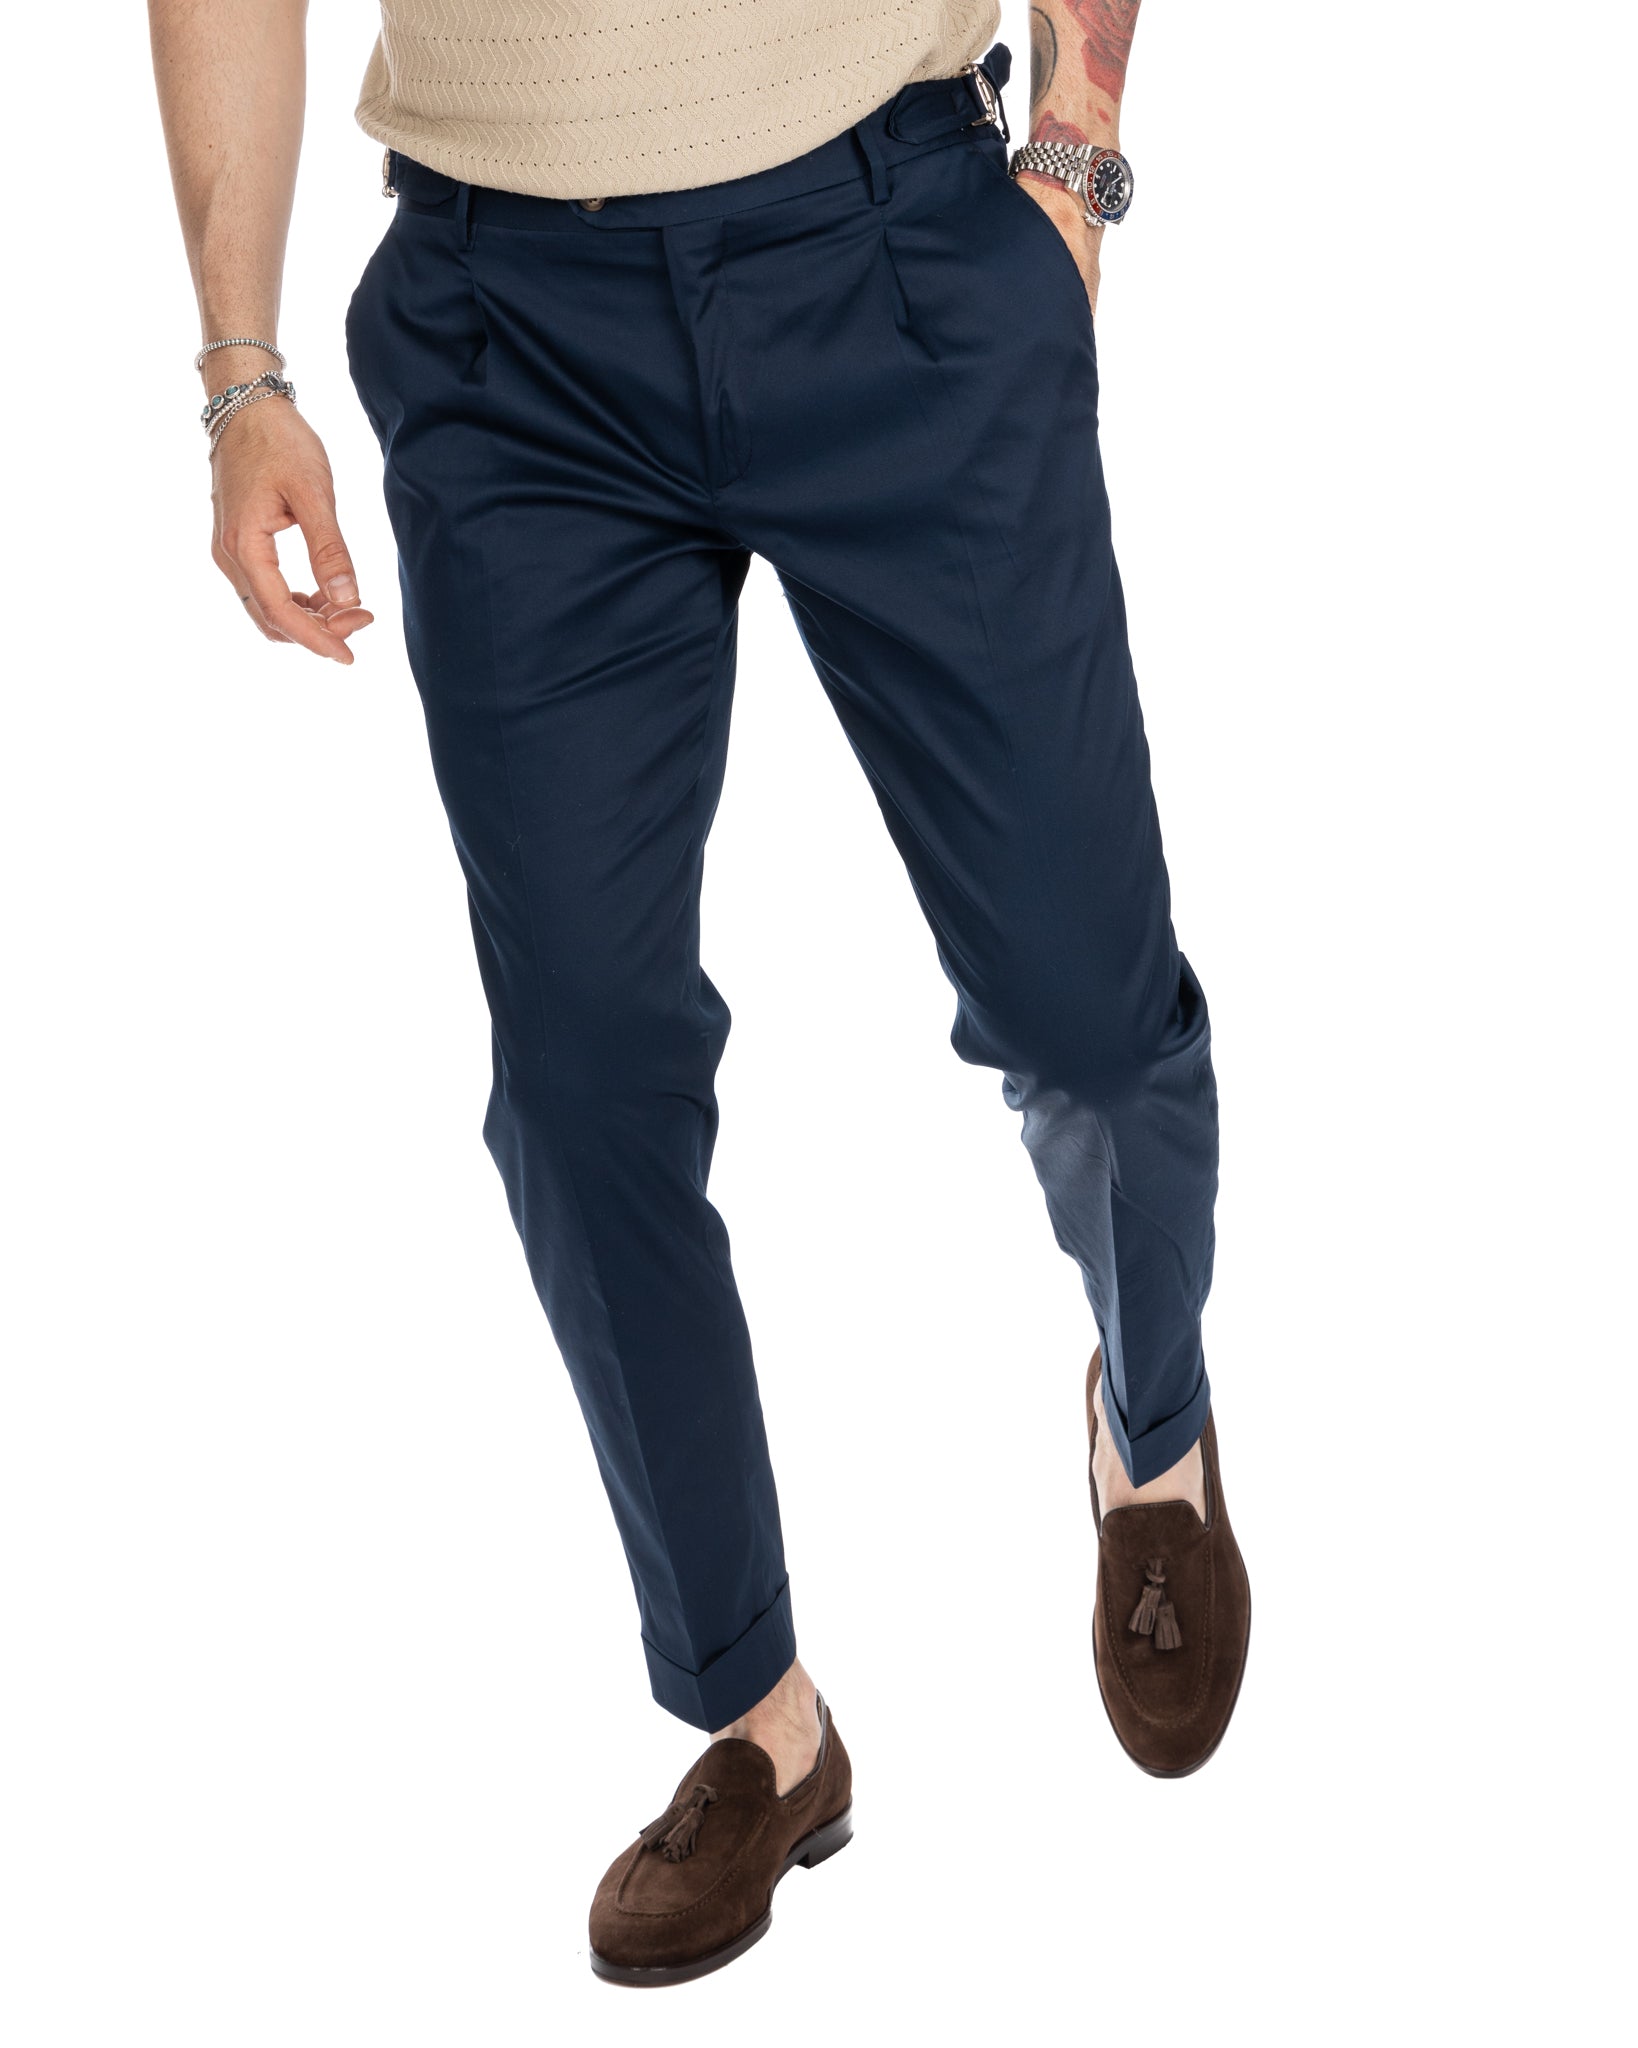 James - pantalone blu con fibbie